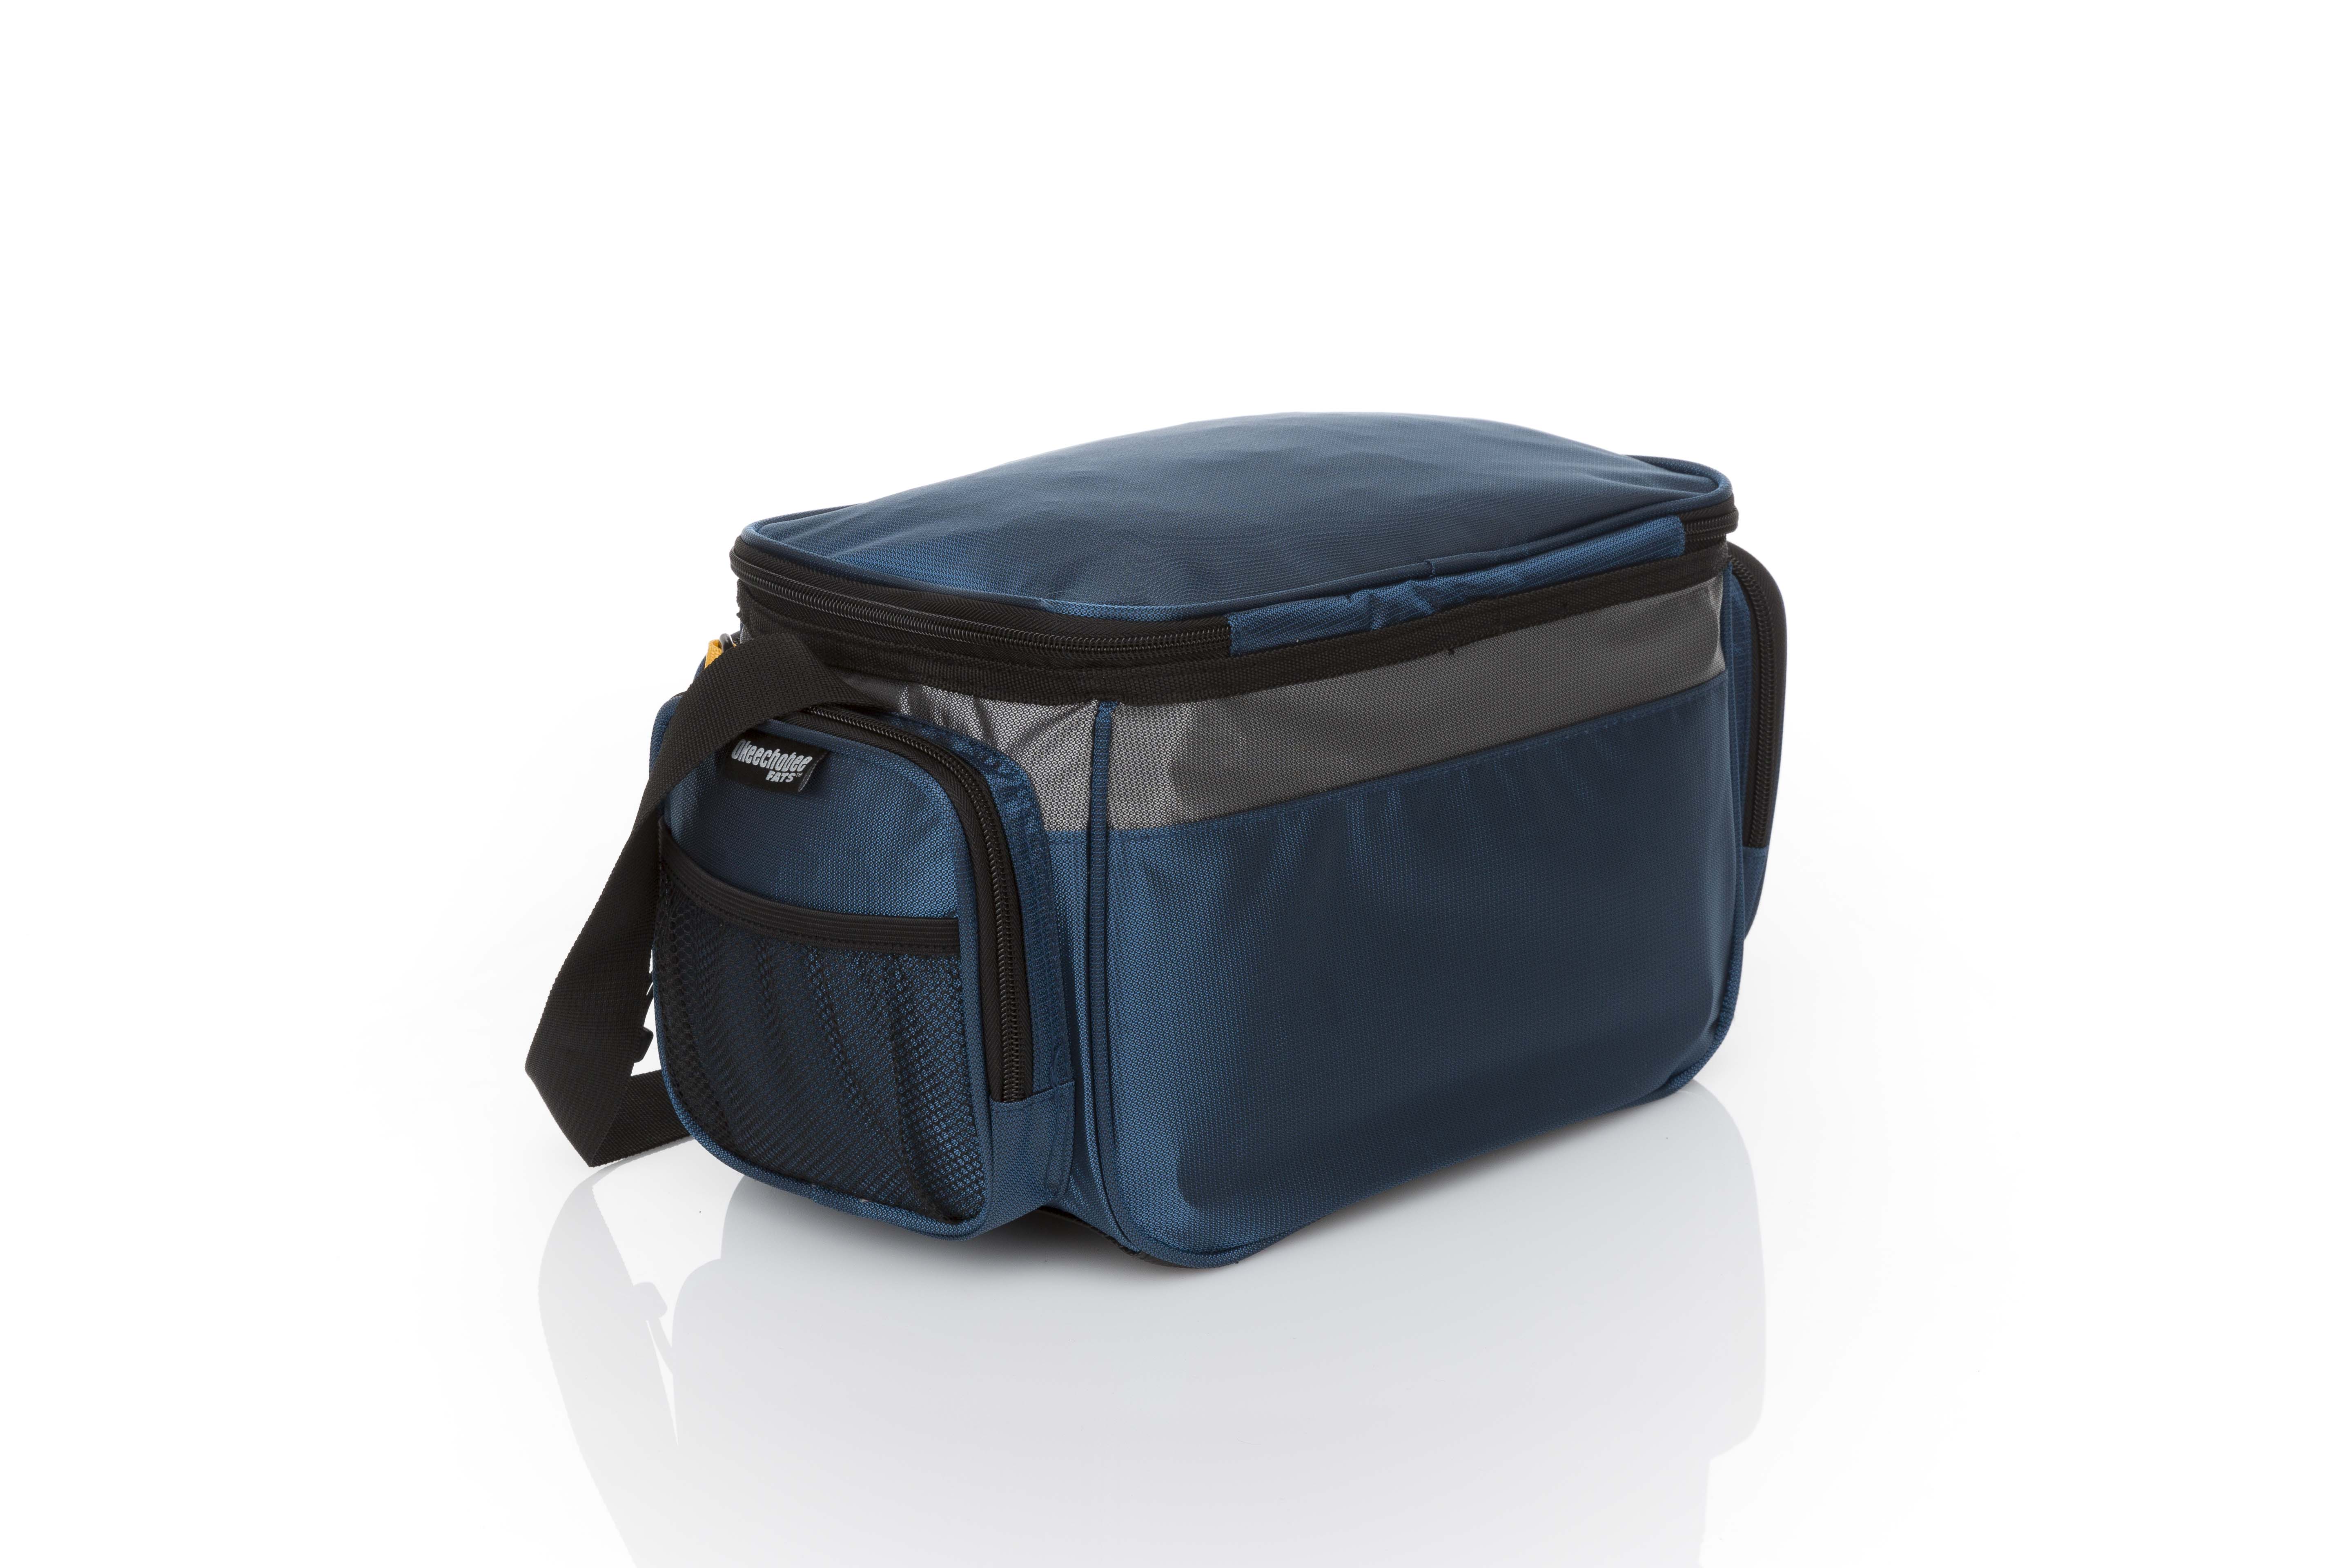 Okeechobee Fats - Small - Soft Bag with 2 Medium Utility Boxes - NWT